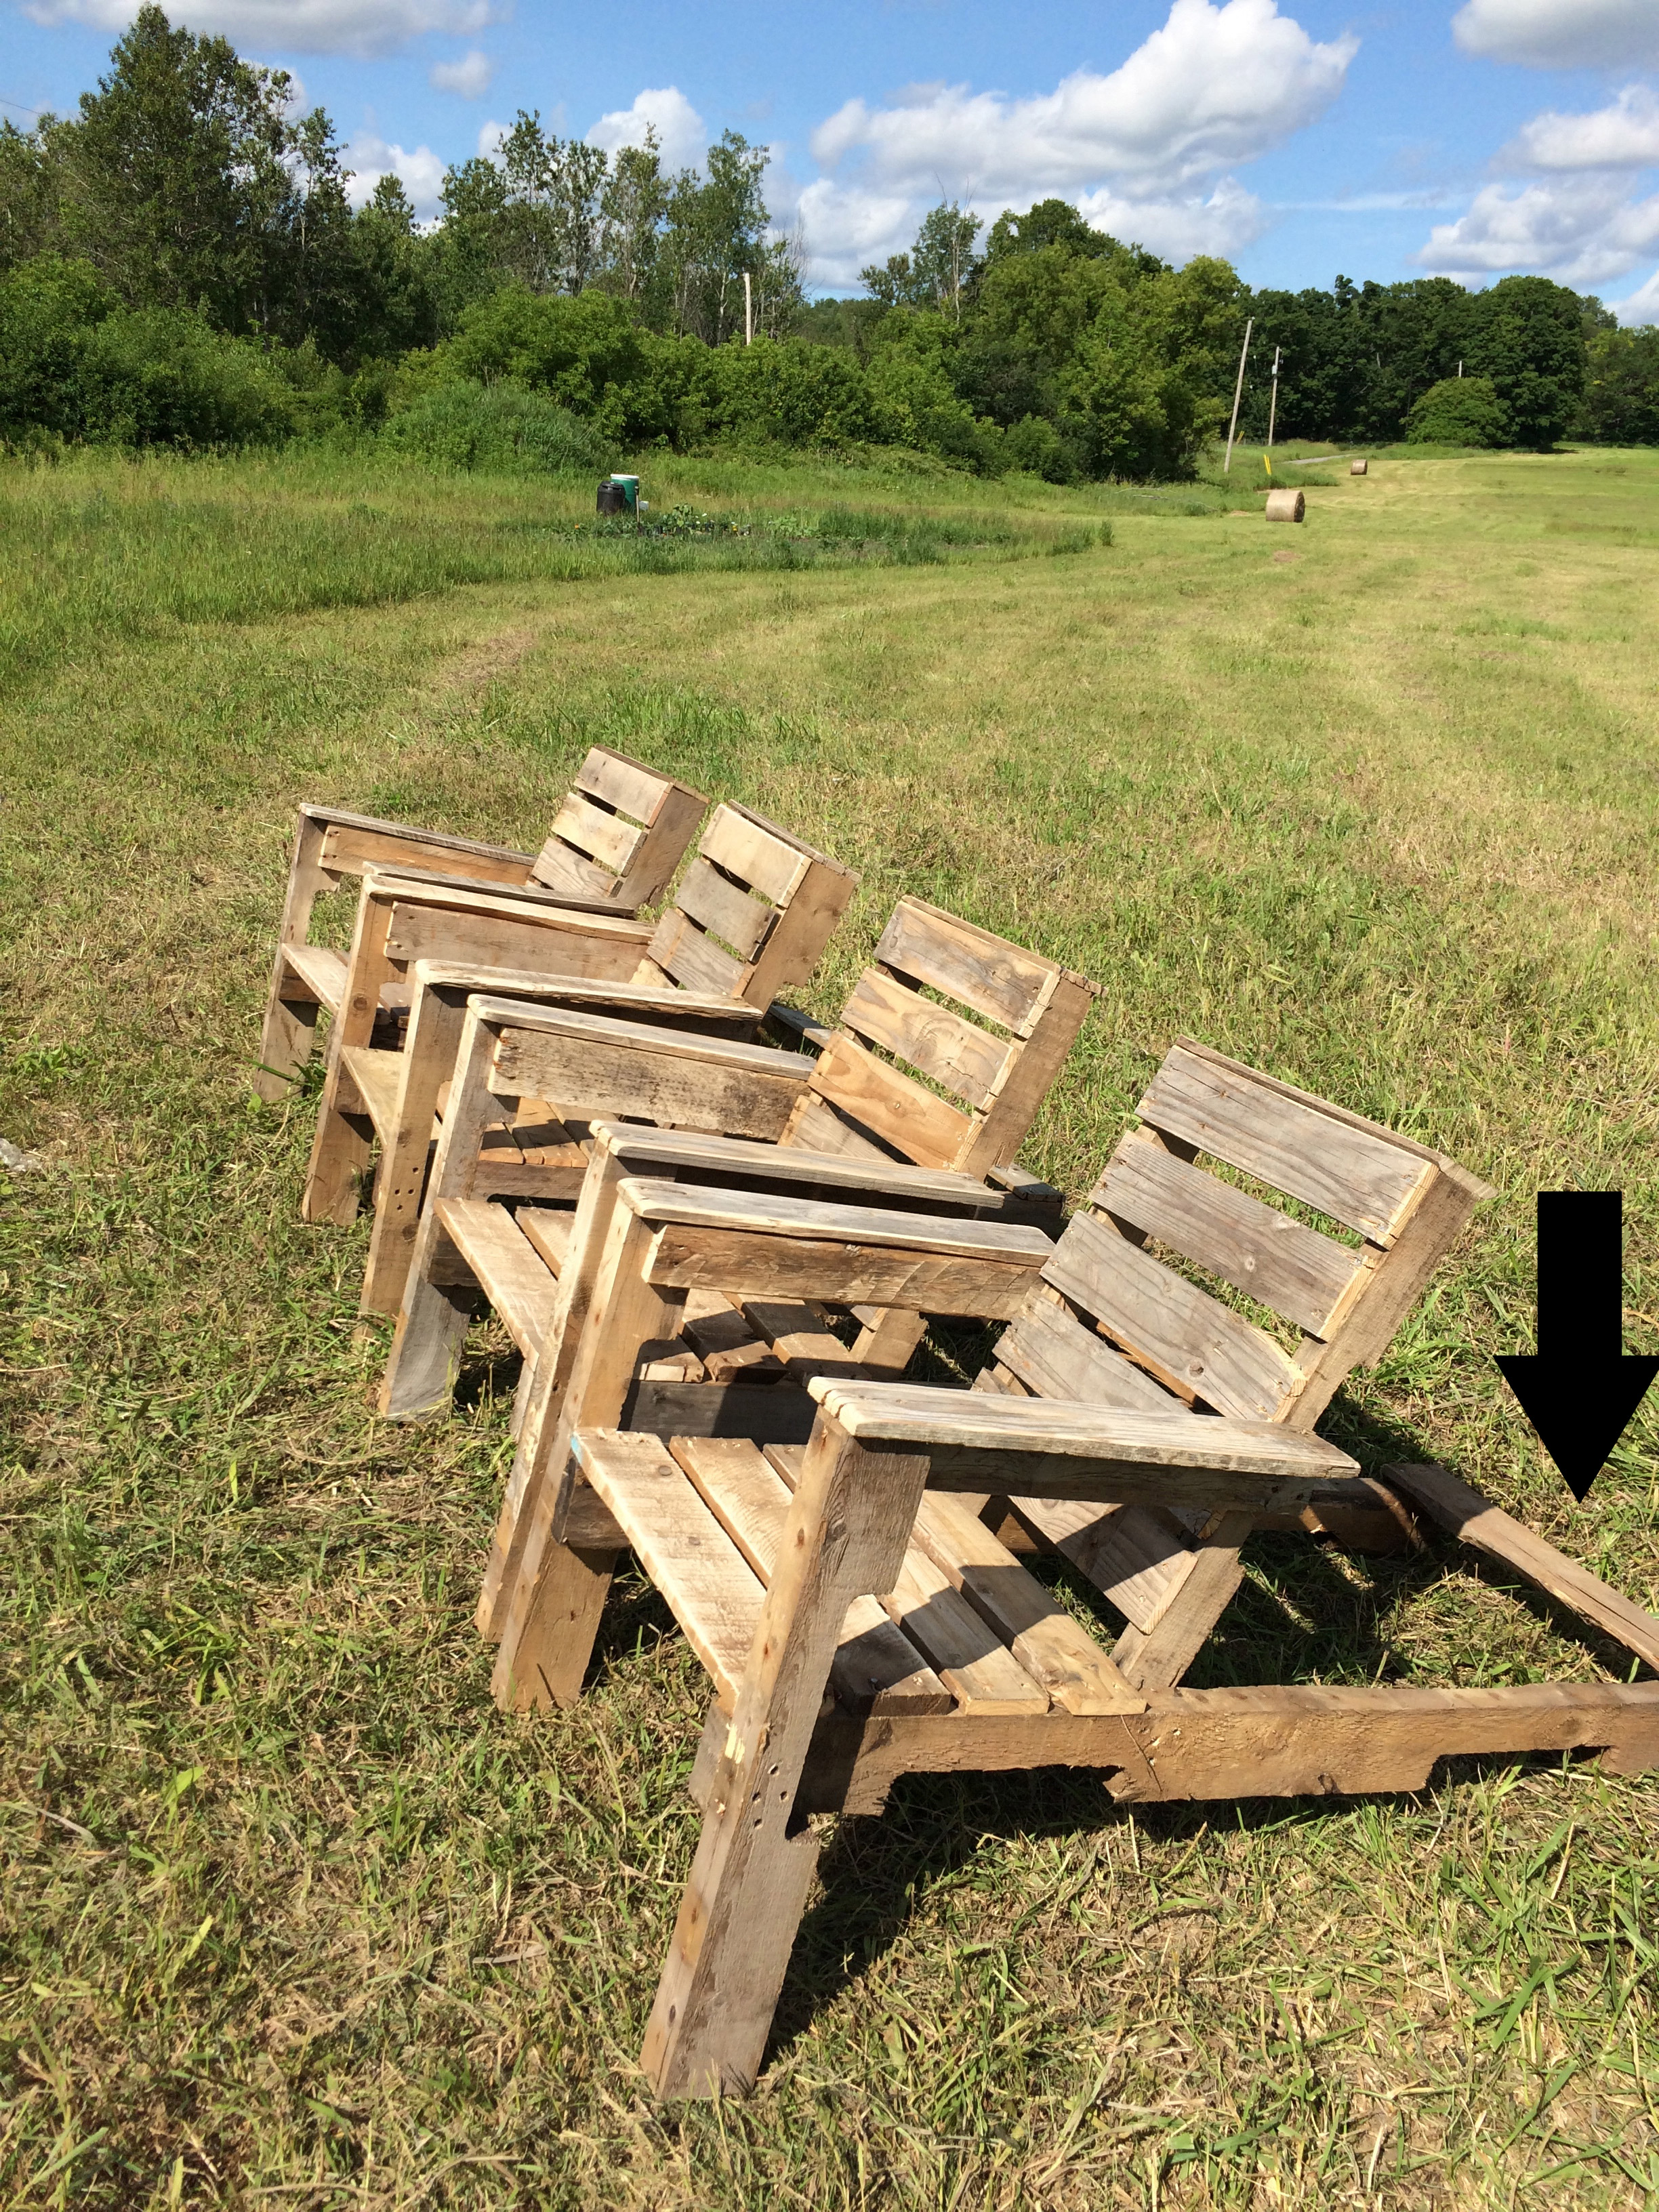 DIY Wooden Pallet Chair plans